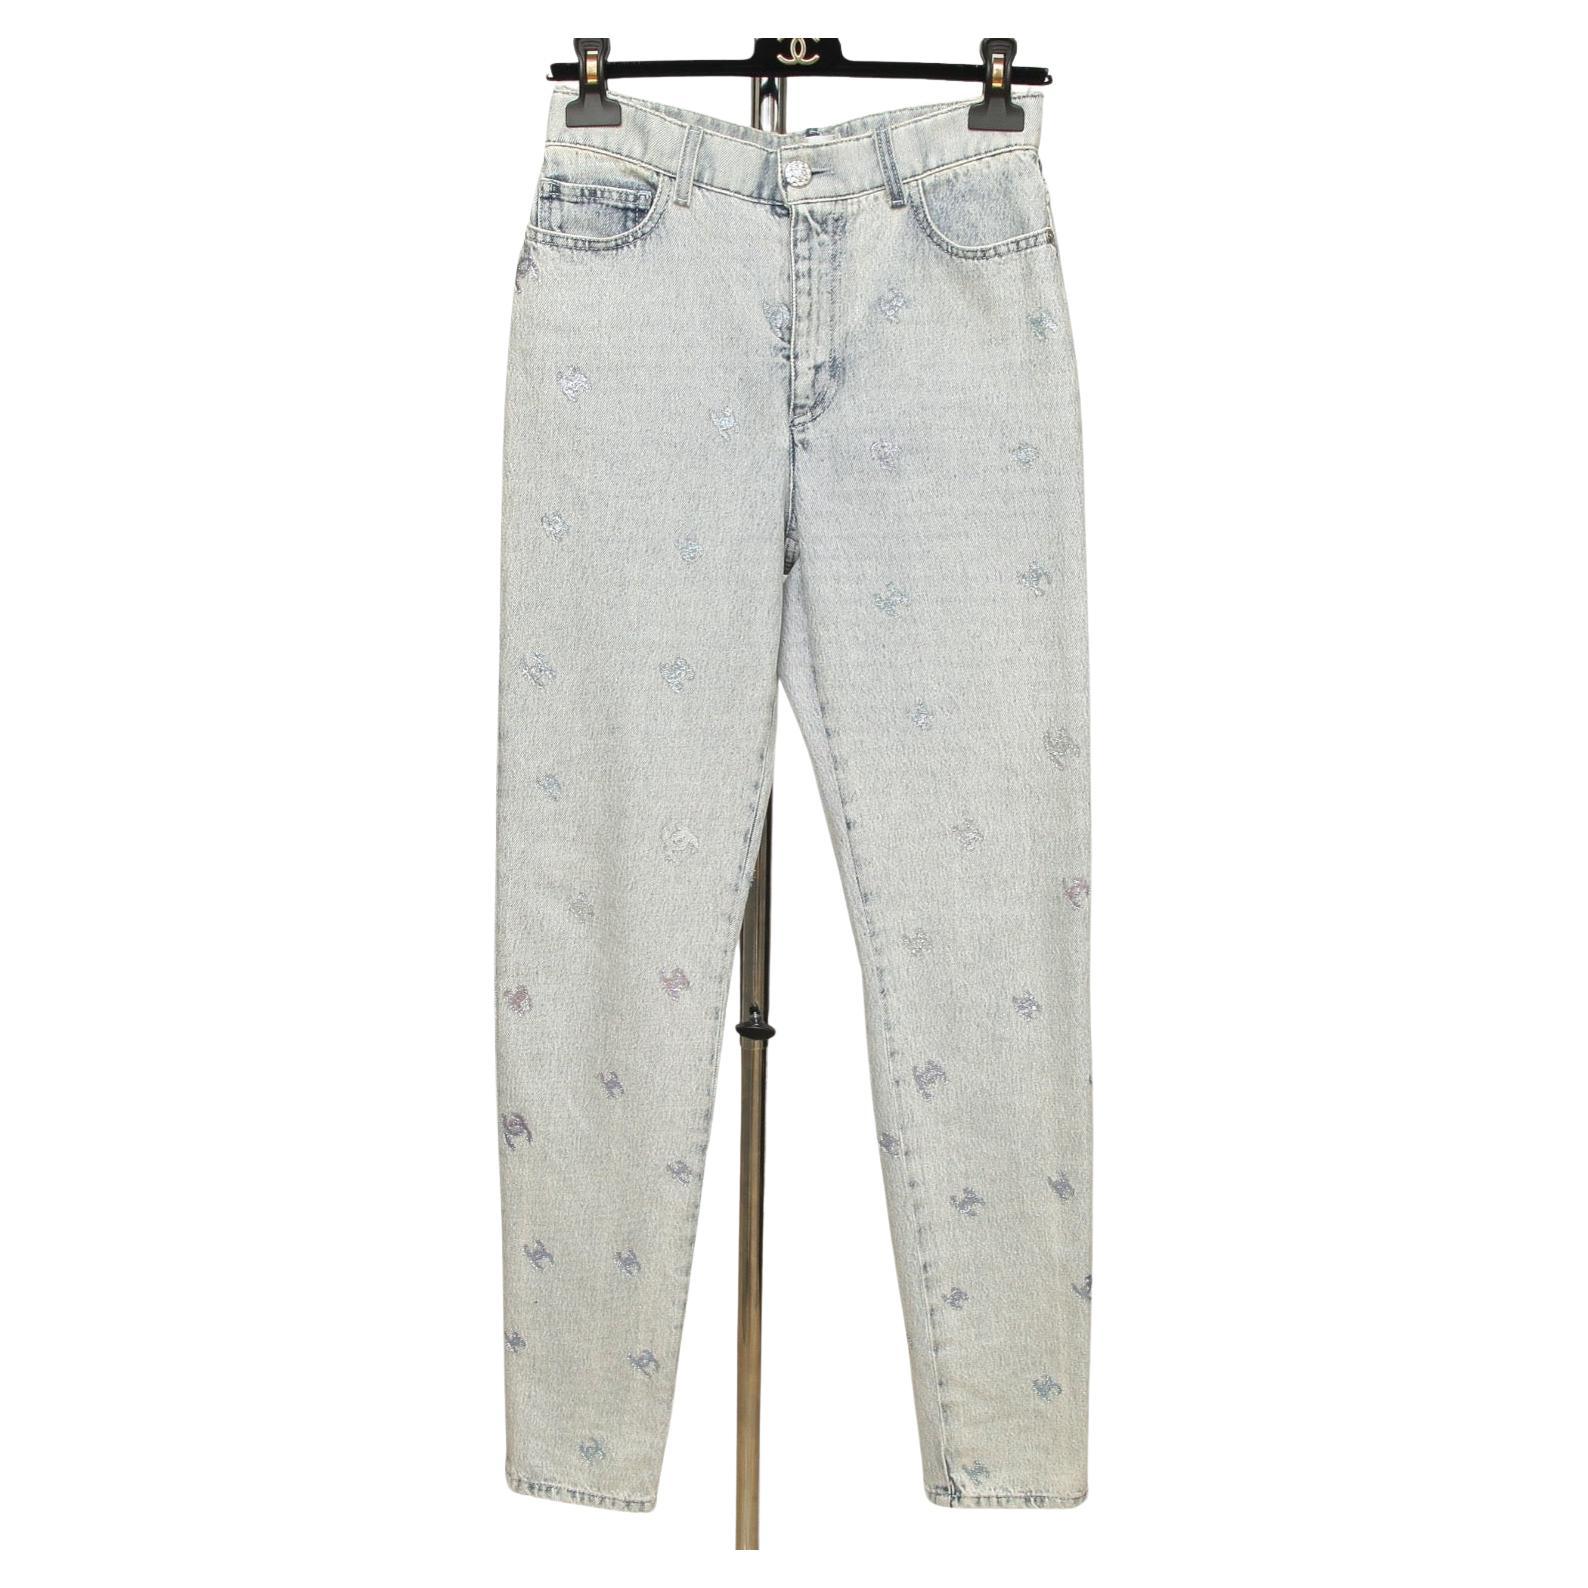 CHANEL Jeans Denim Hellblau Skinny Leg CC Silber hochgeschlossen Gr. 36 2021 NEU